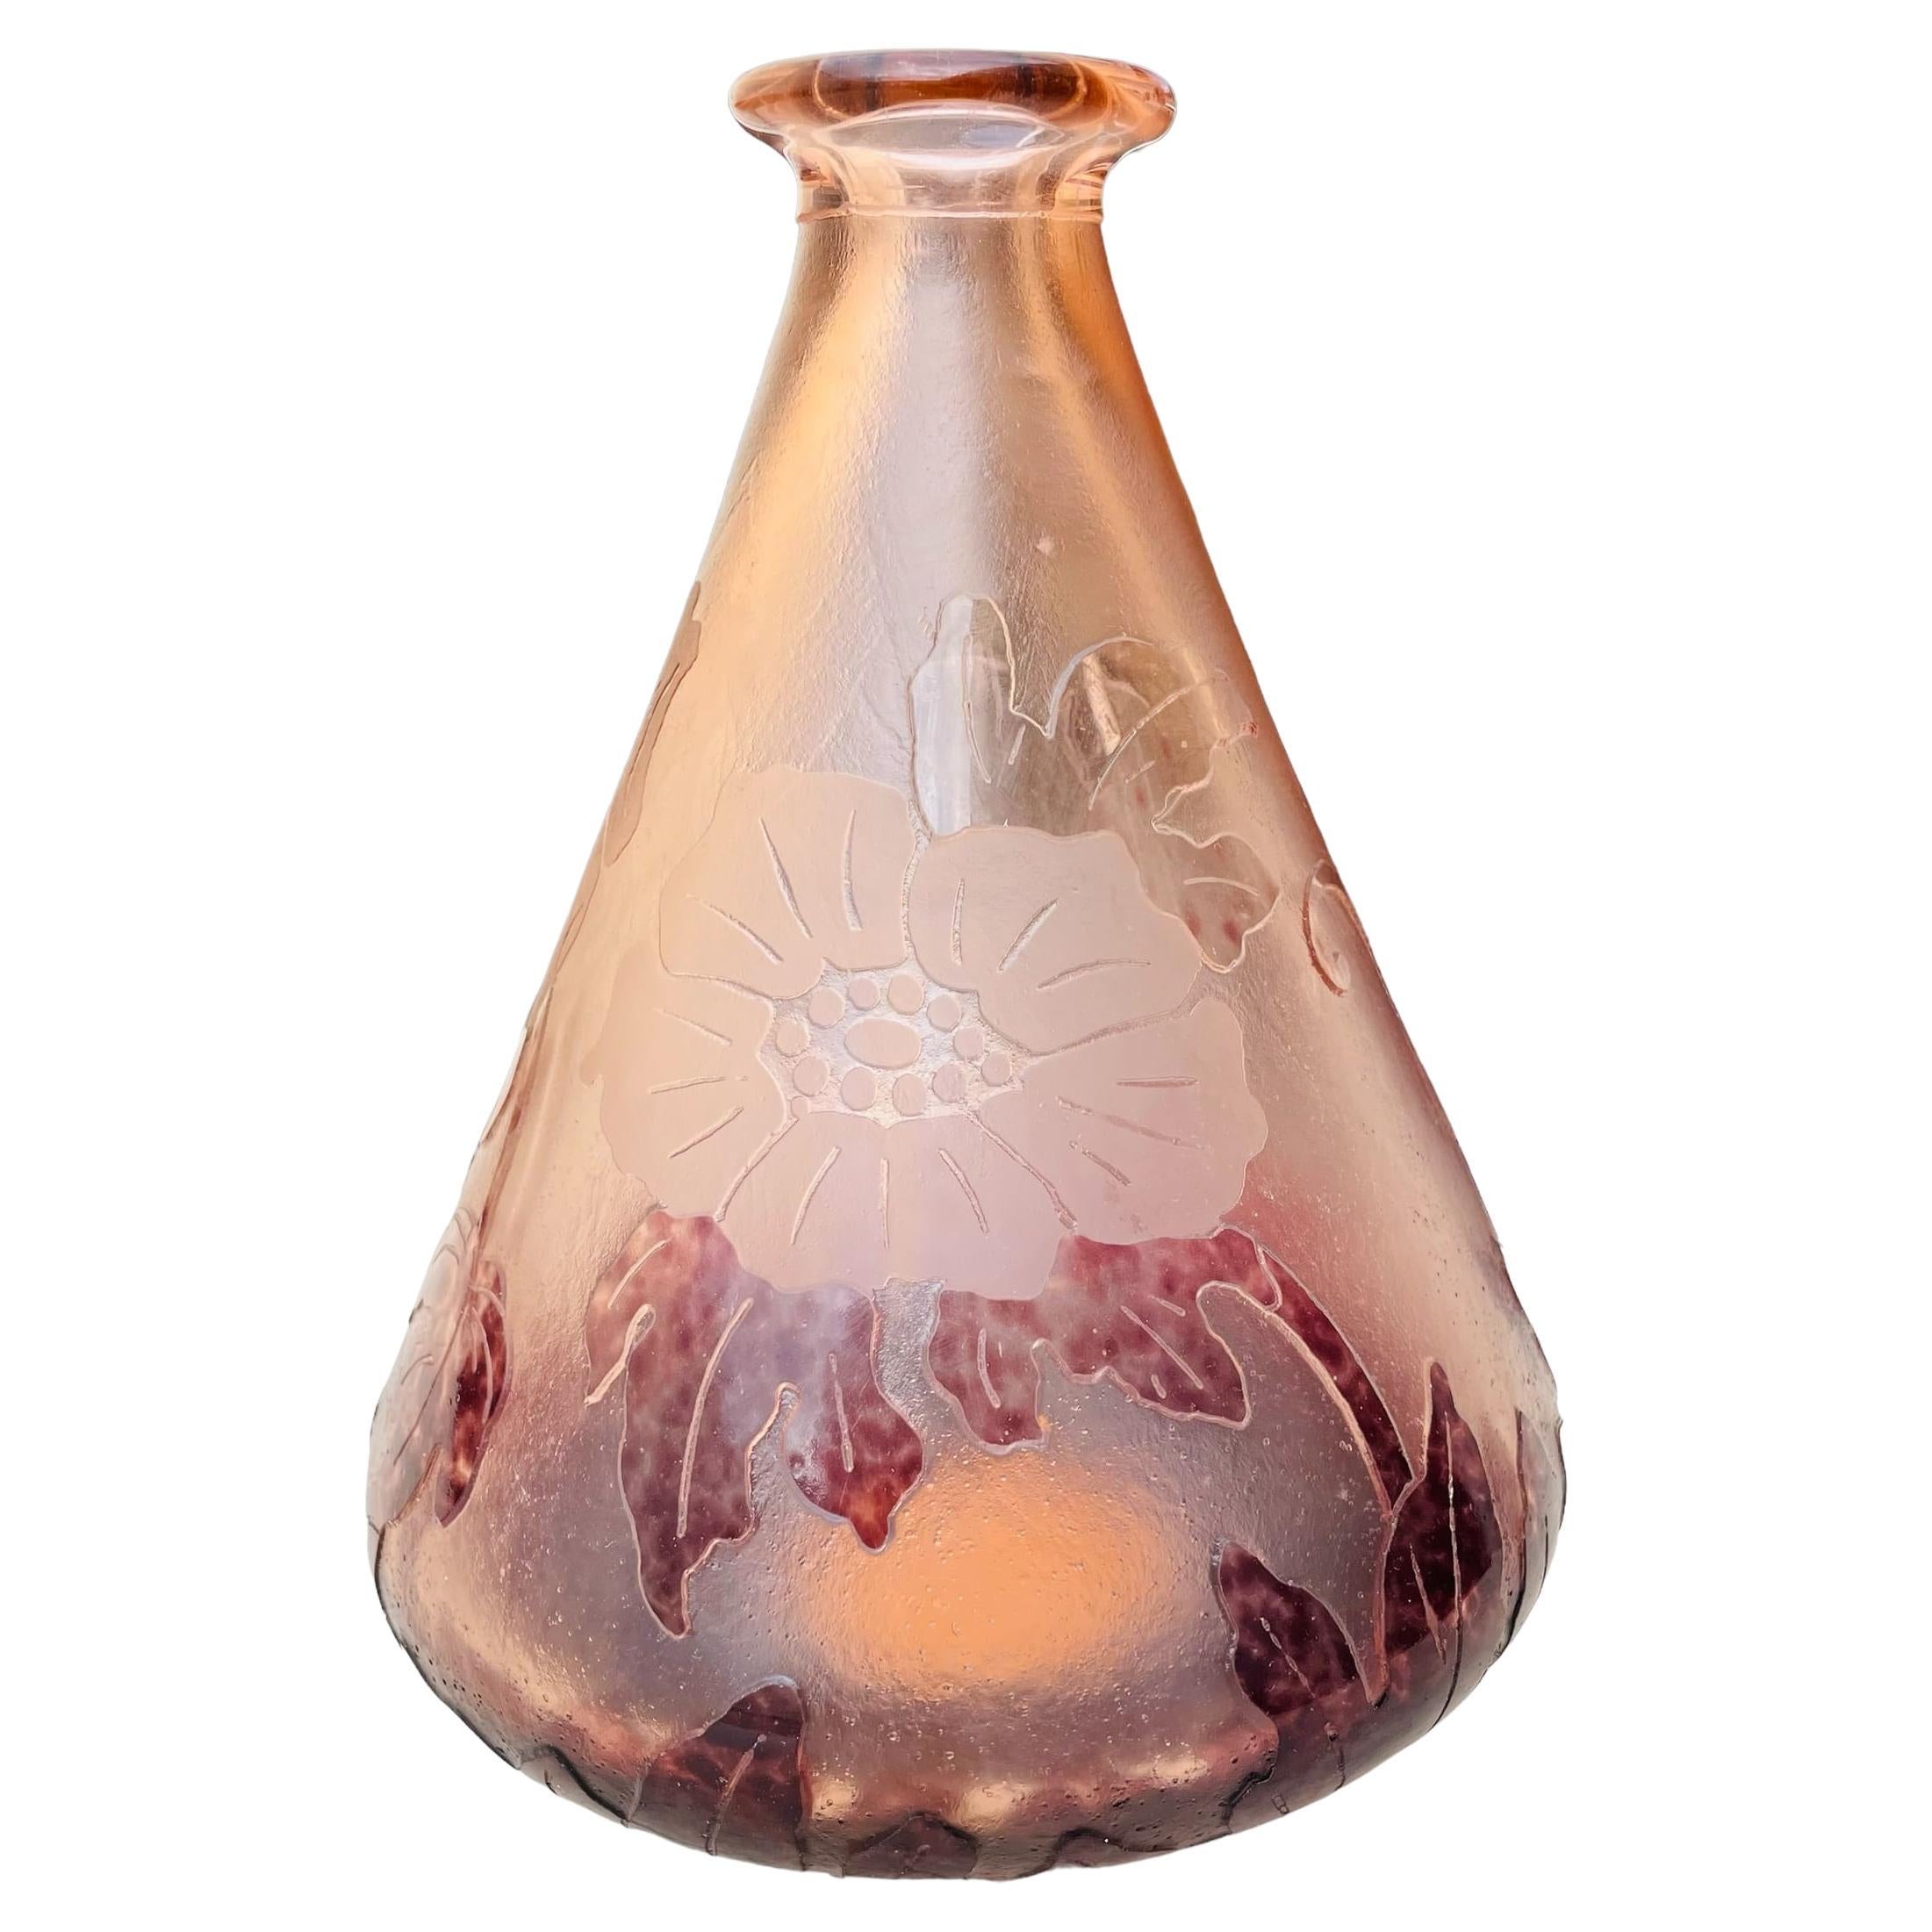 Art Deco Glass Vase by Charles Schneider - Le Verre Français
Circa 1930
Cameo glass, unreferenced decor
Signed 